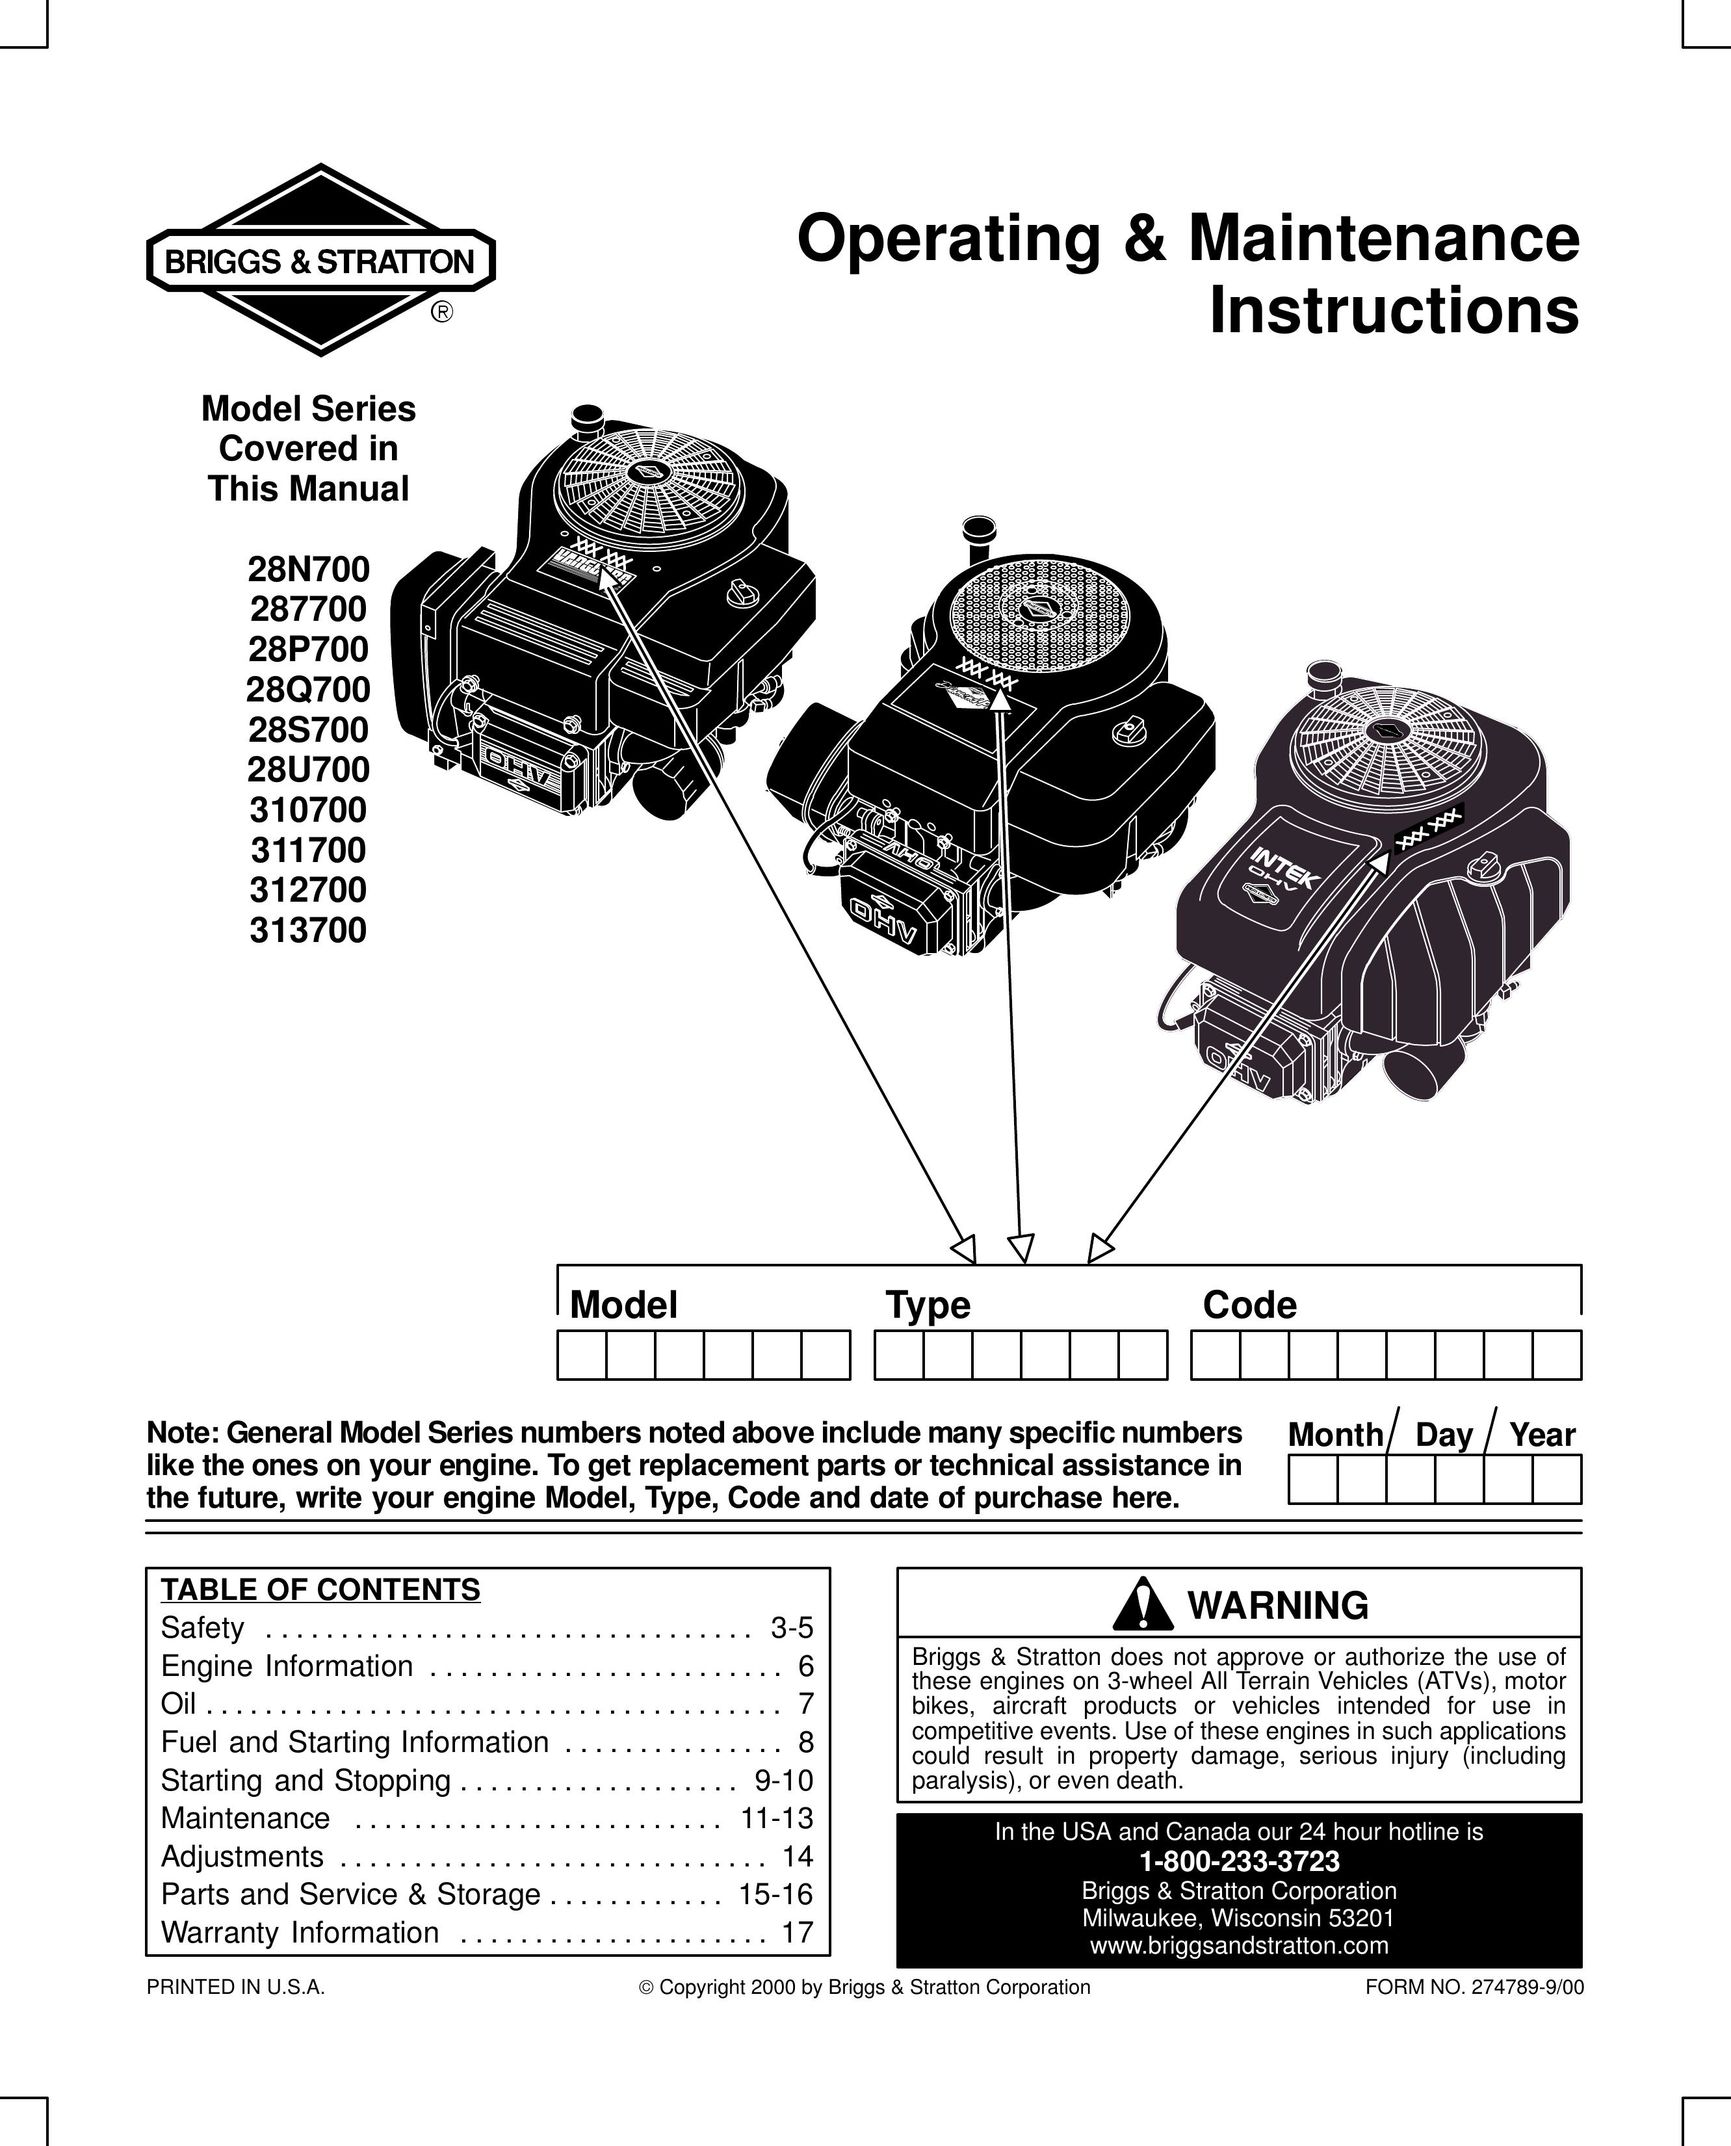 Briggs & Stratton 311700 Air Cleaner User Manual